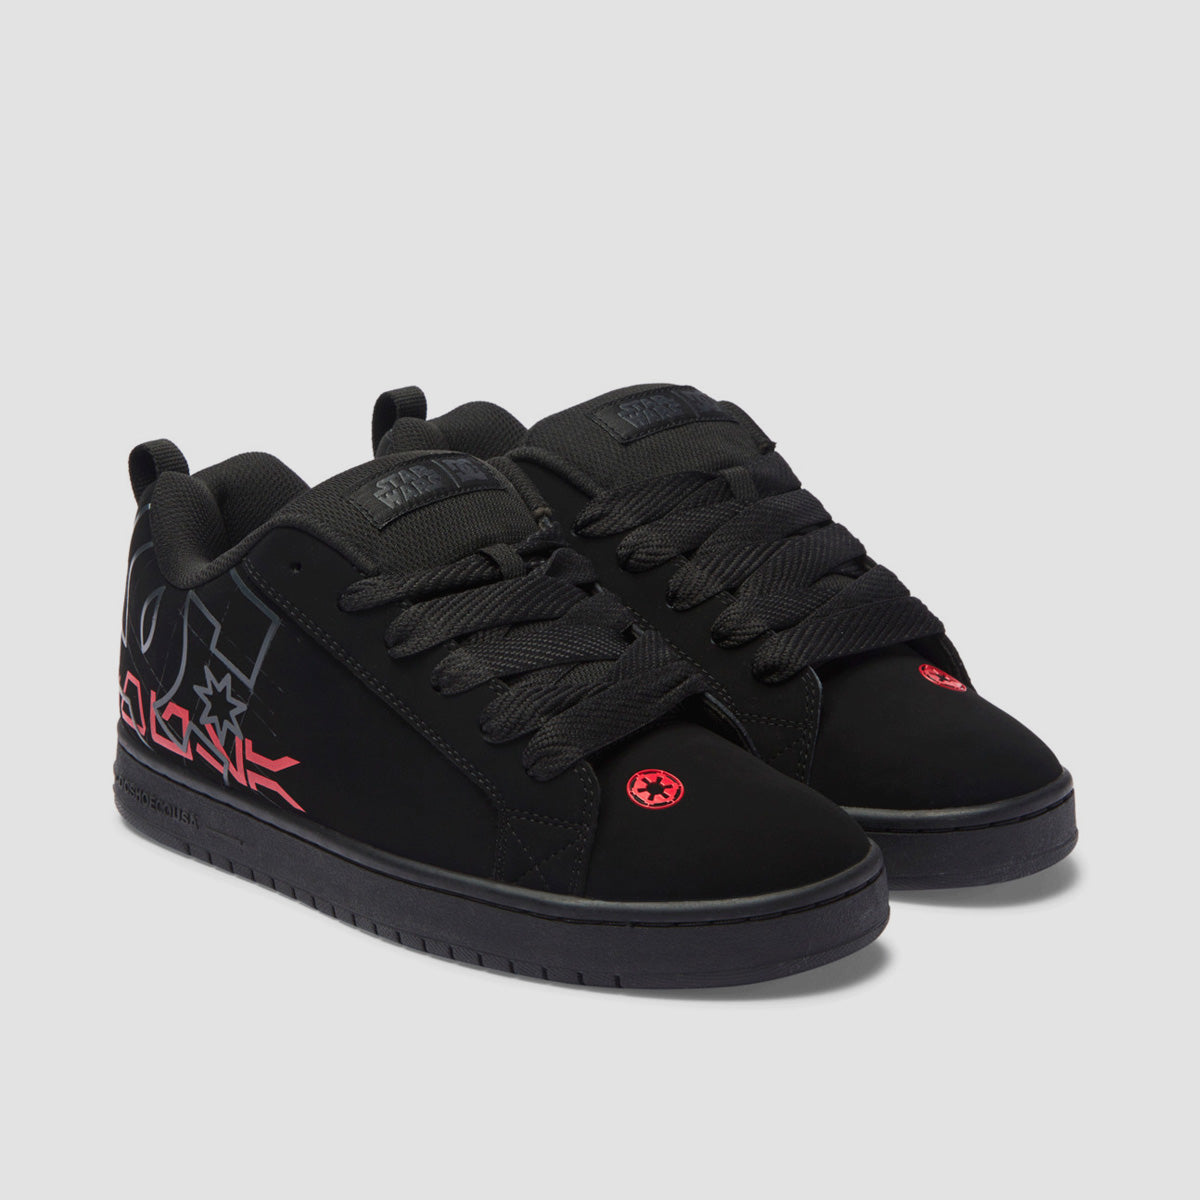 DC X Star Wars Court Graffik Shoes - Black/Grey/Red